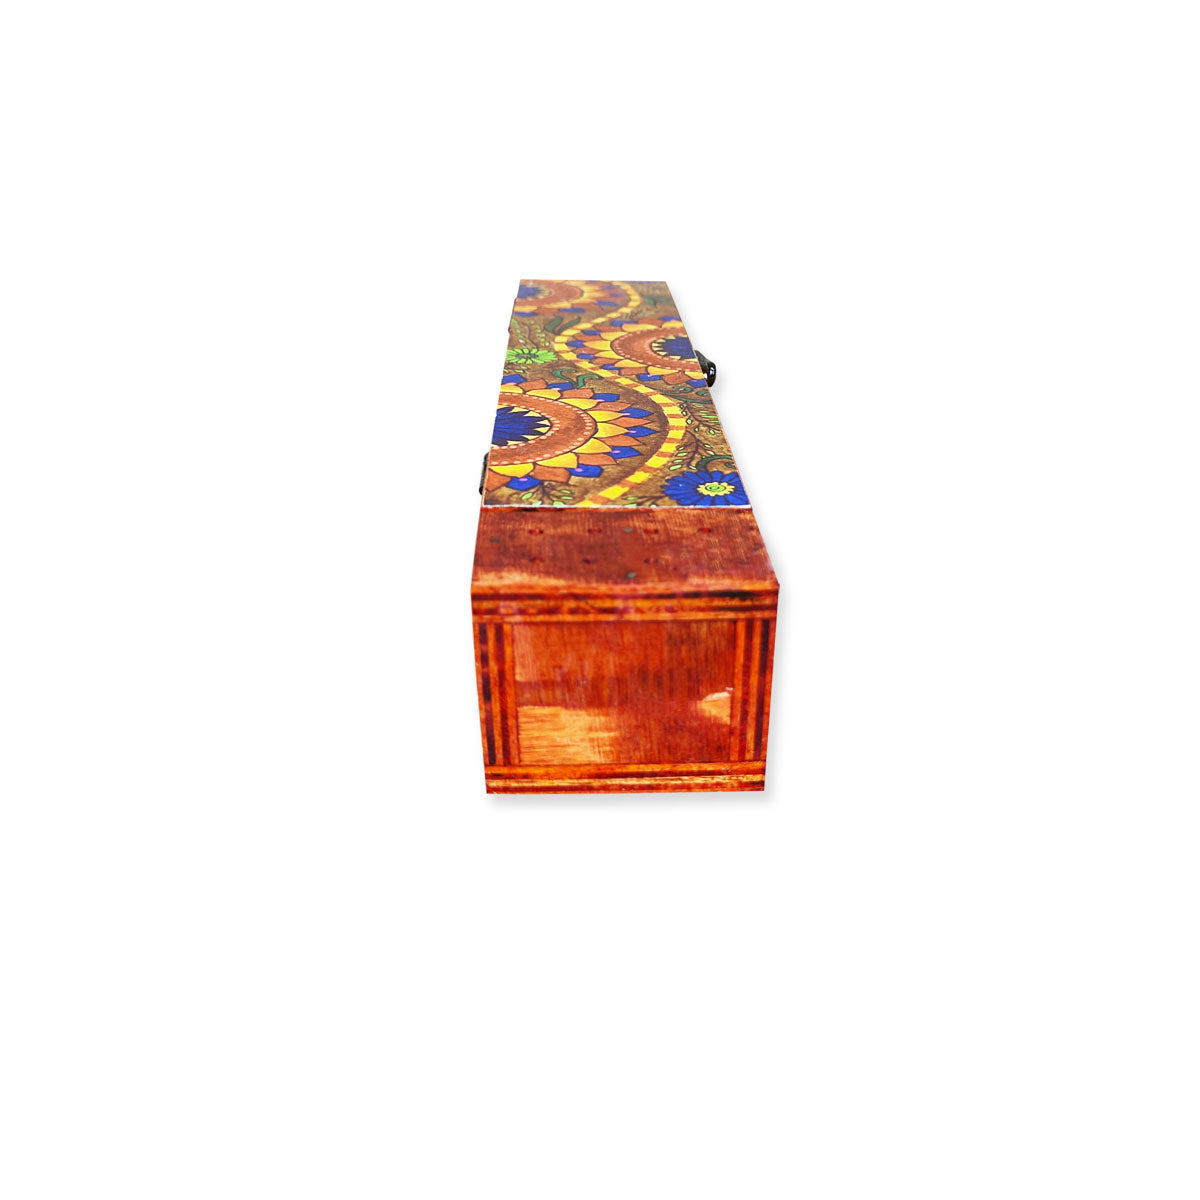 Mandala Agarbatti Stand & Storage Box